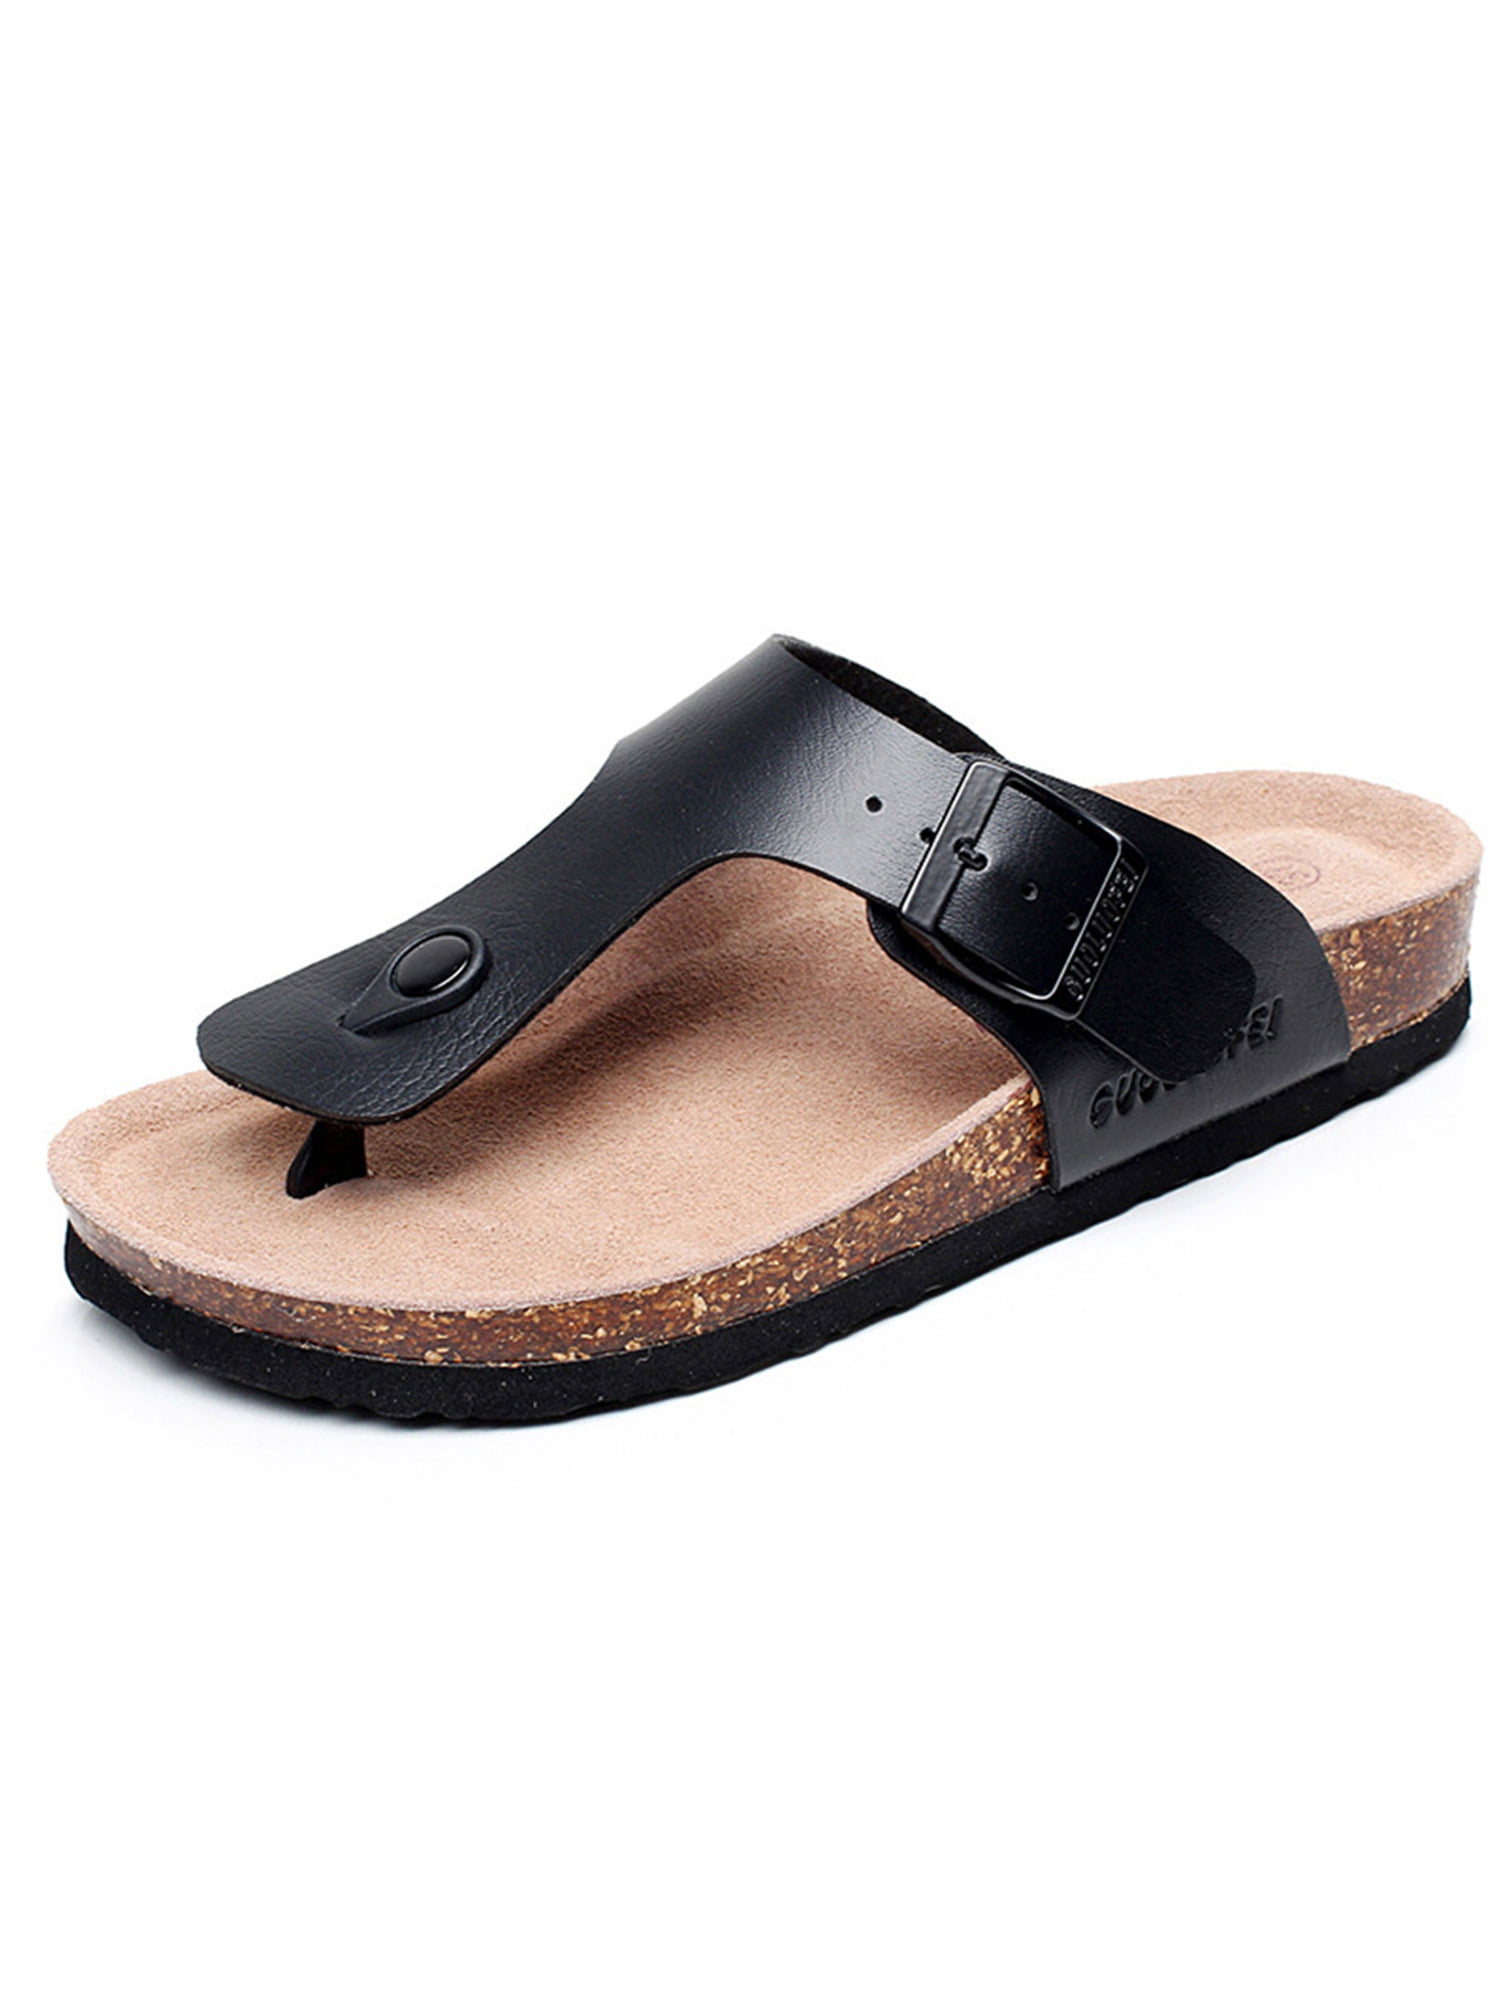 Mens Casual PU Leather Slides Footwear Beach Shoe Flip Flops Mules Clogs Slipper